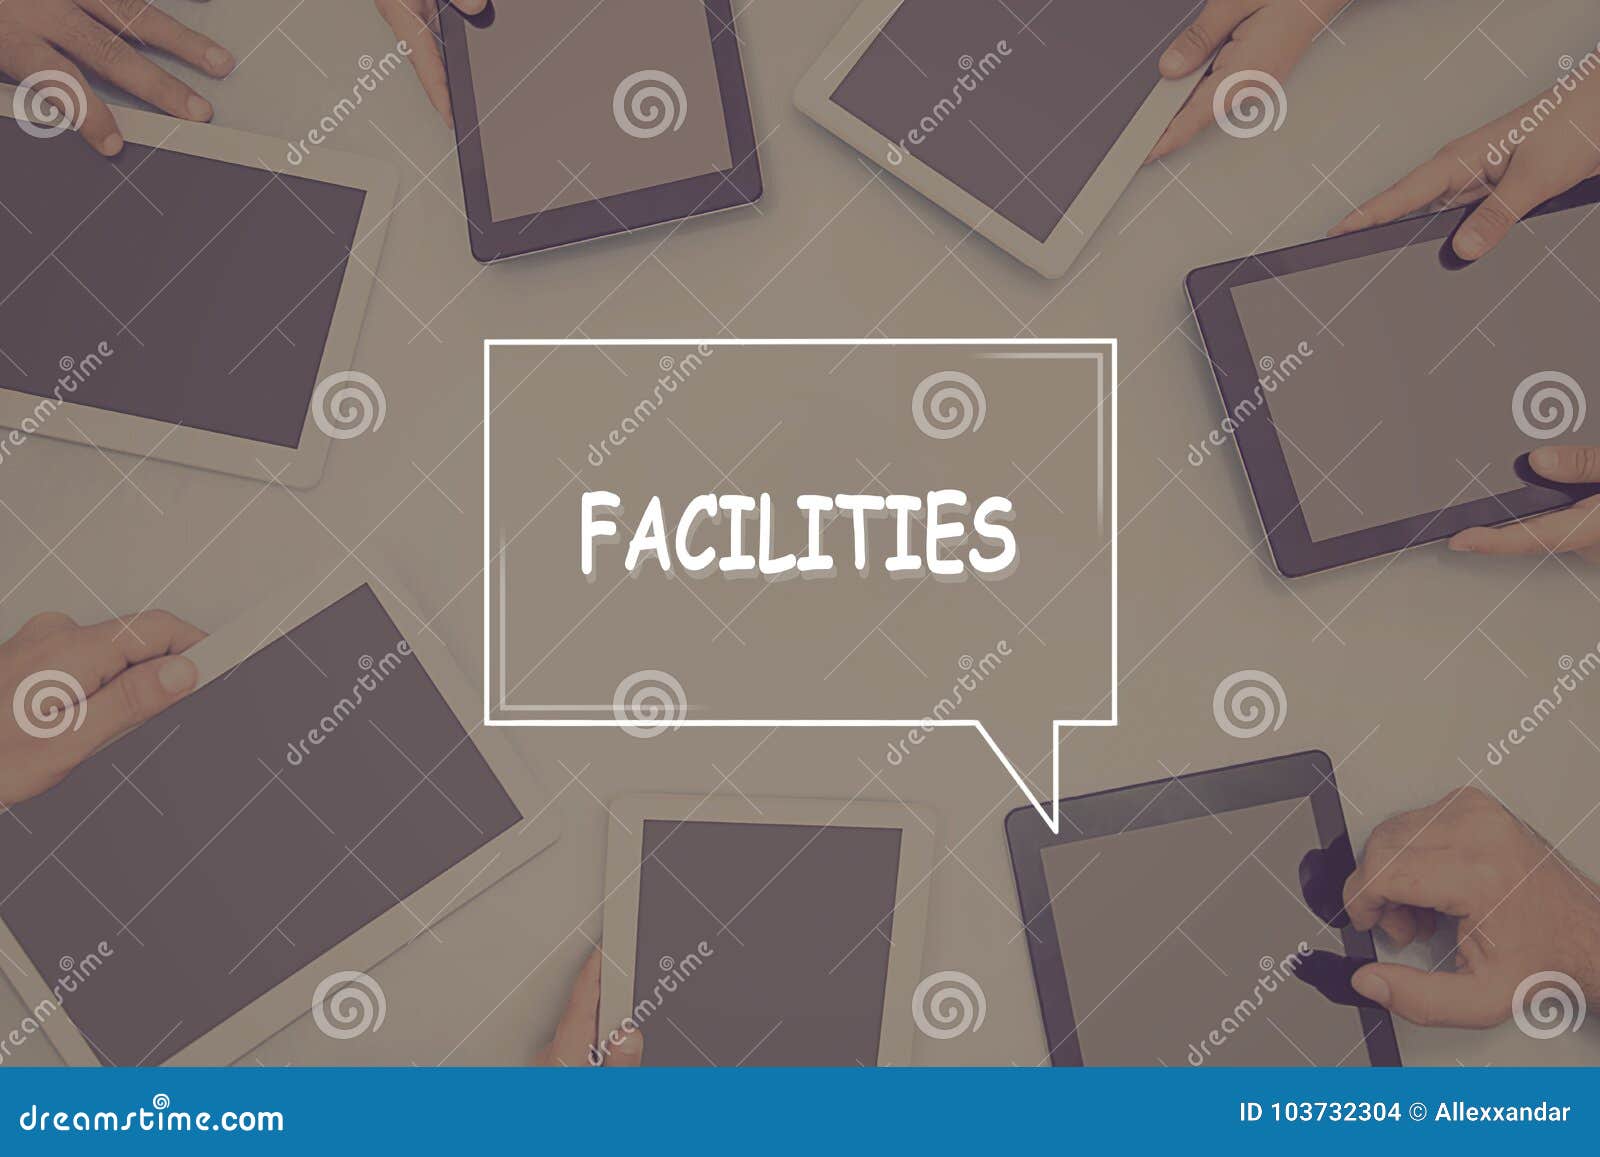 facilities concept business concept.